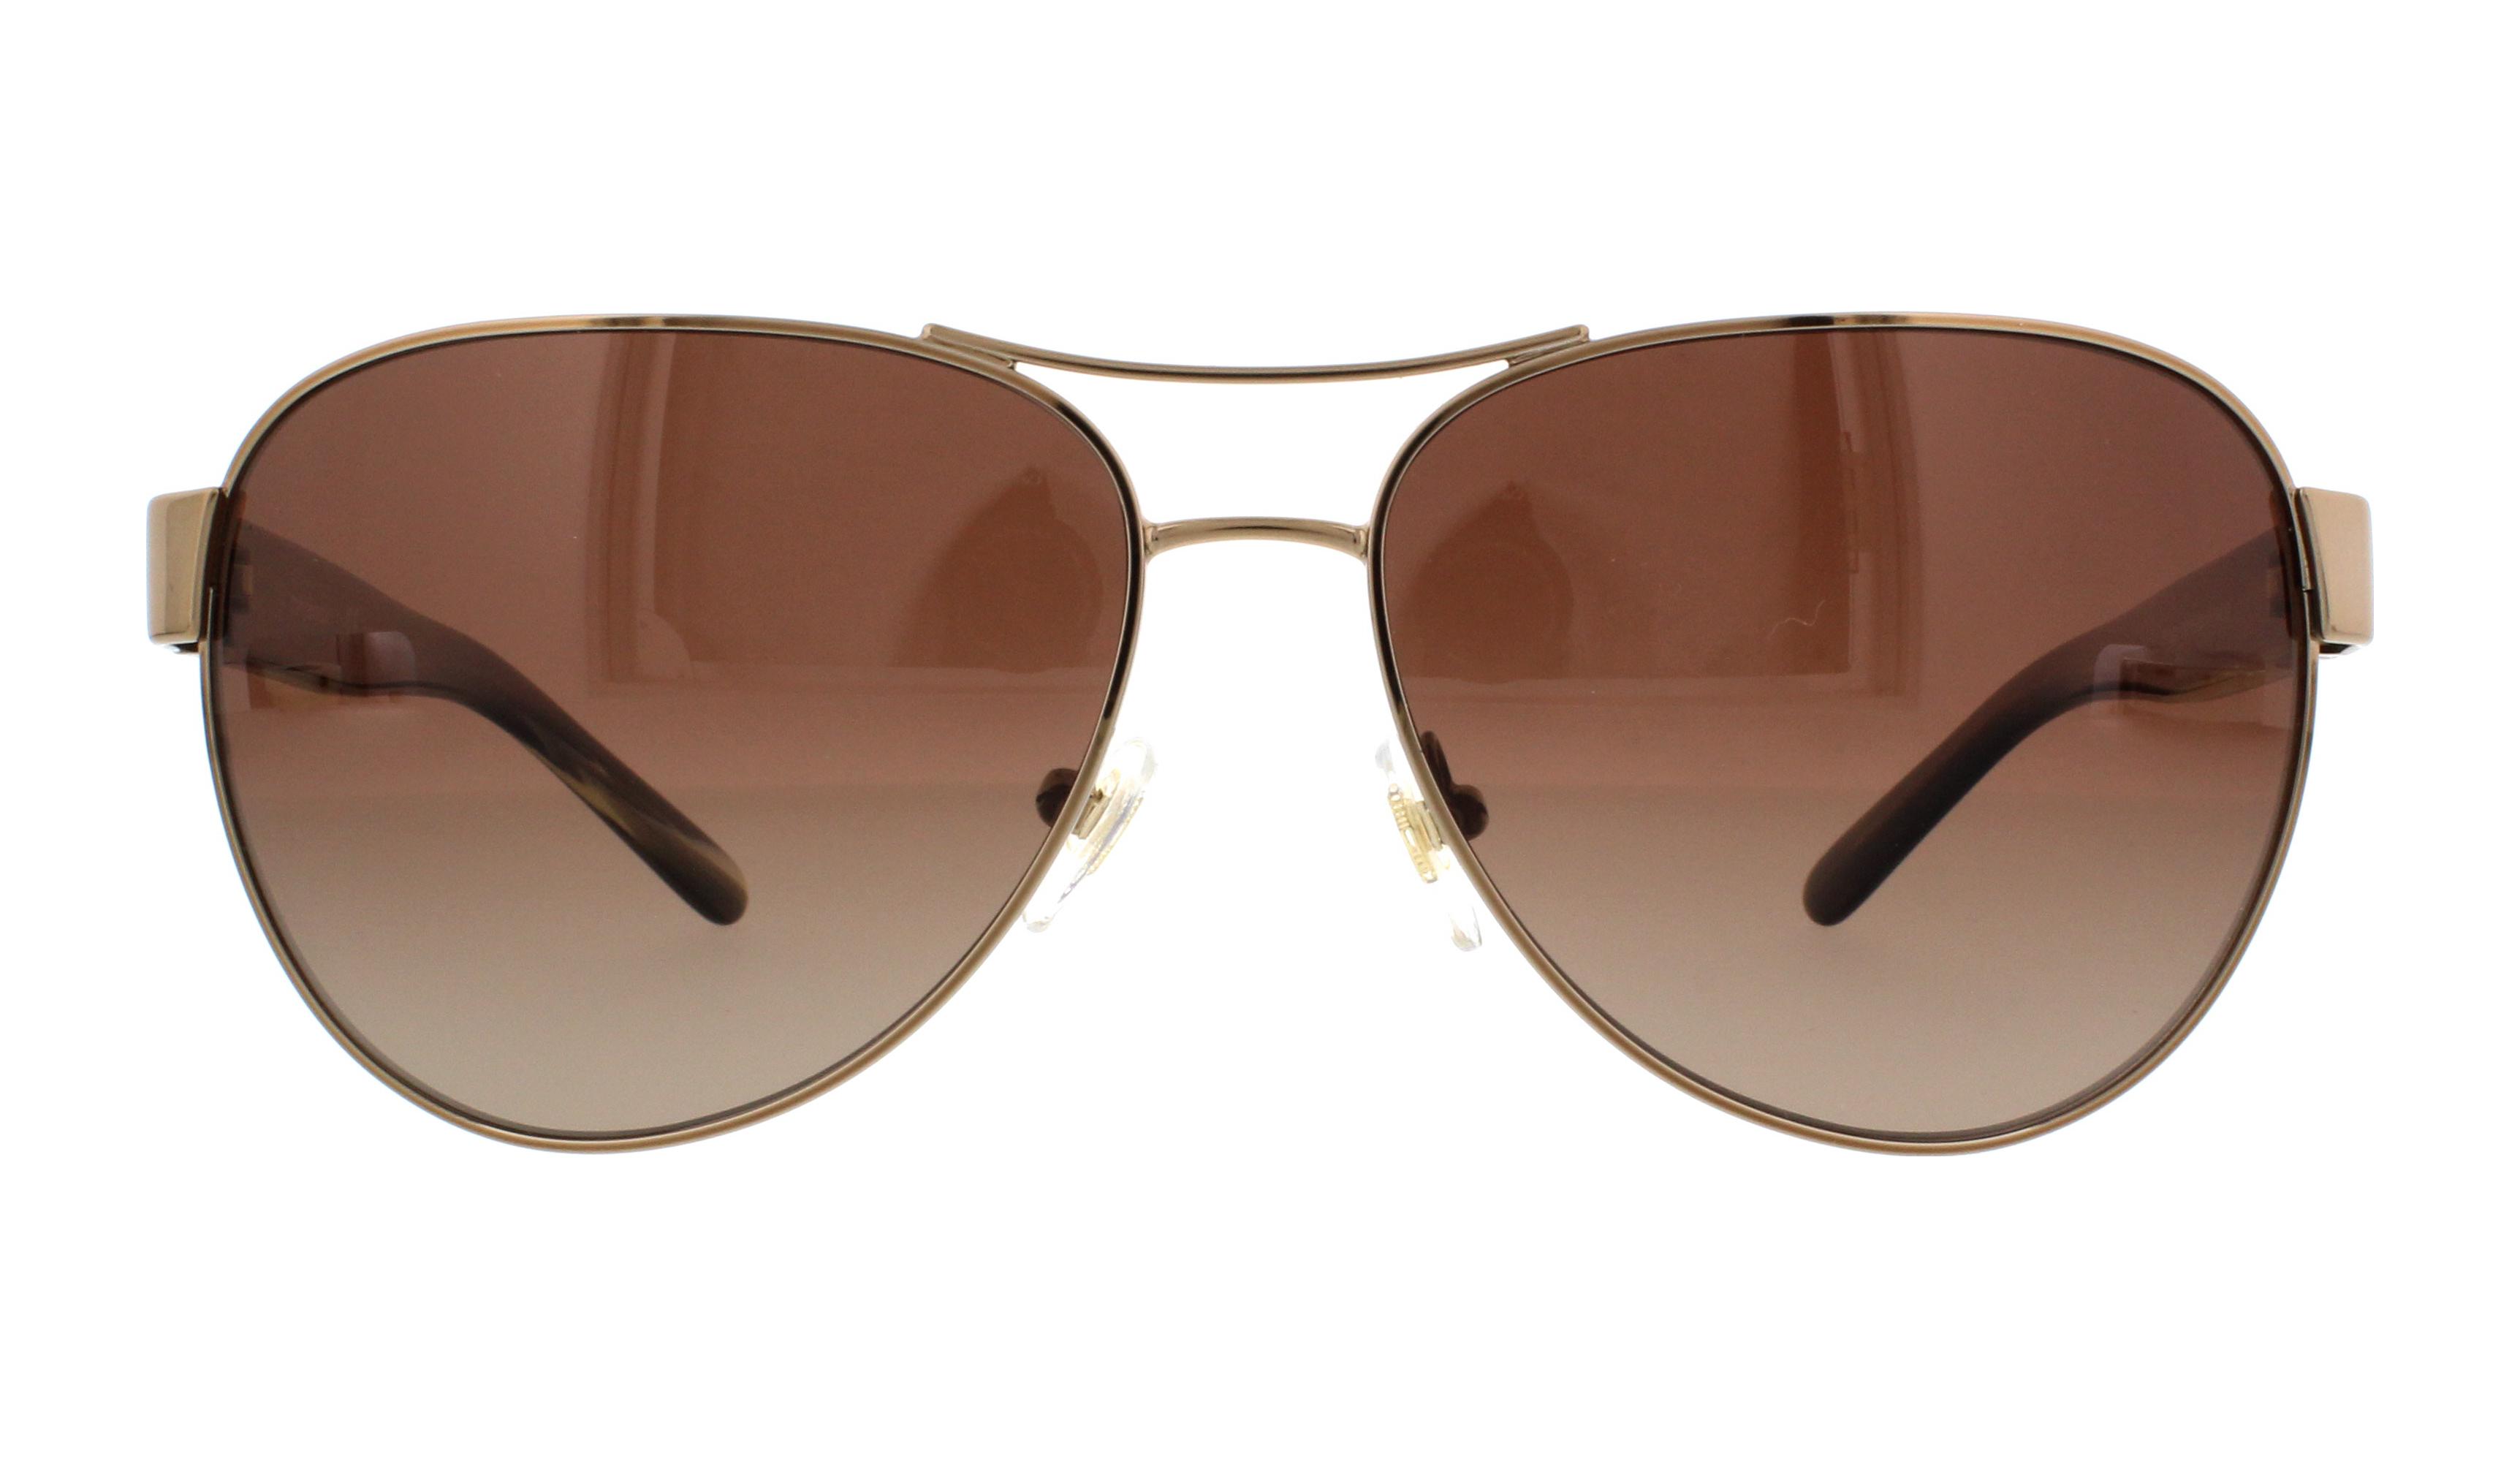 Designer Frames Outlet. Tory Burch Sunglasses TY6051